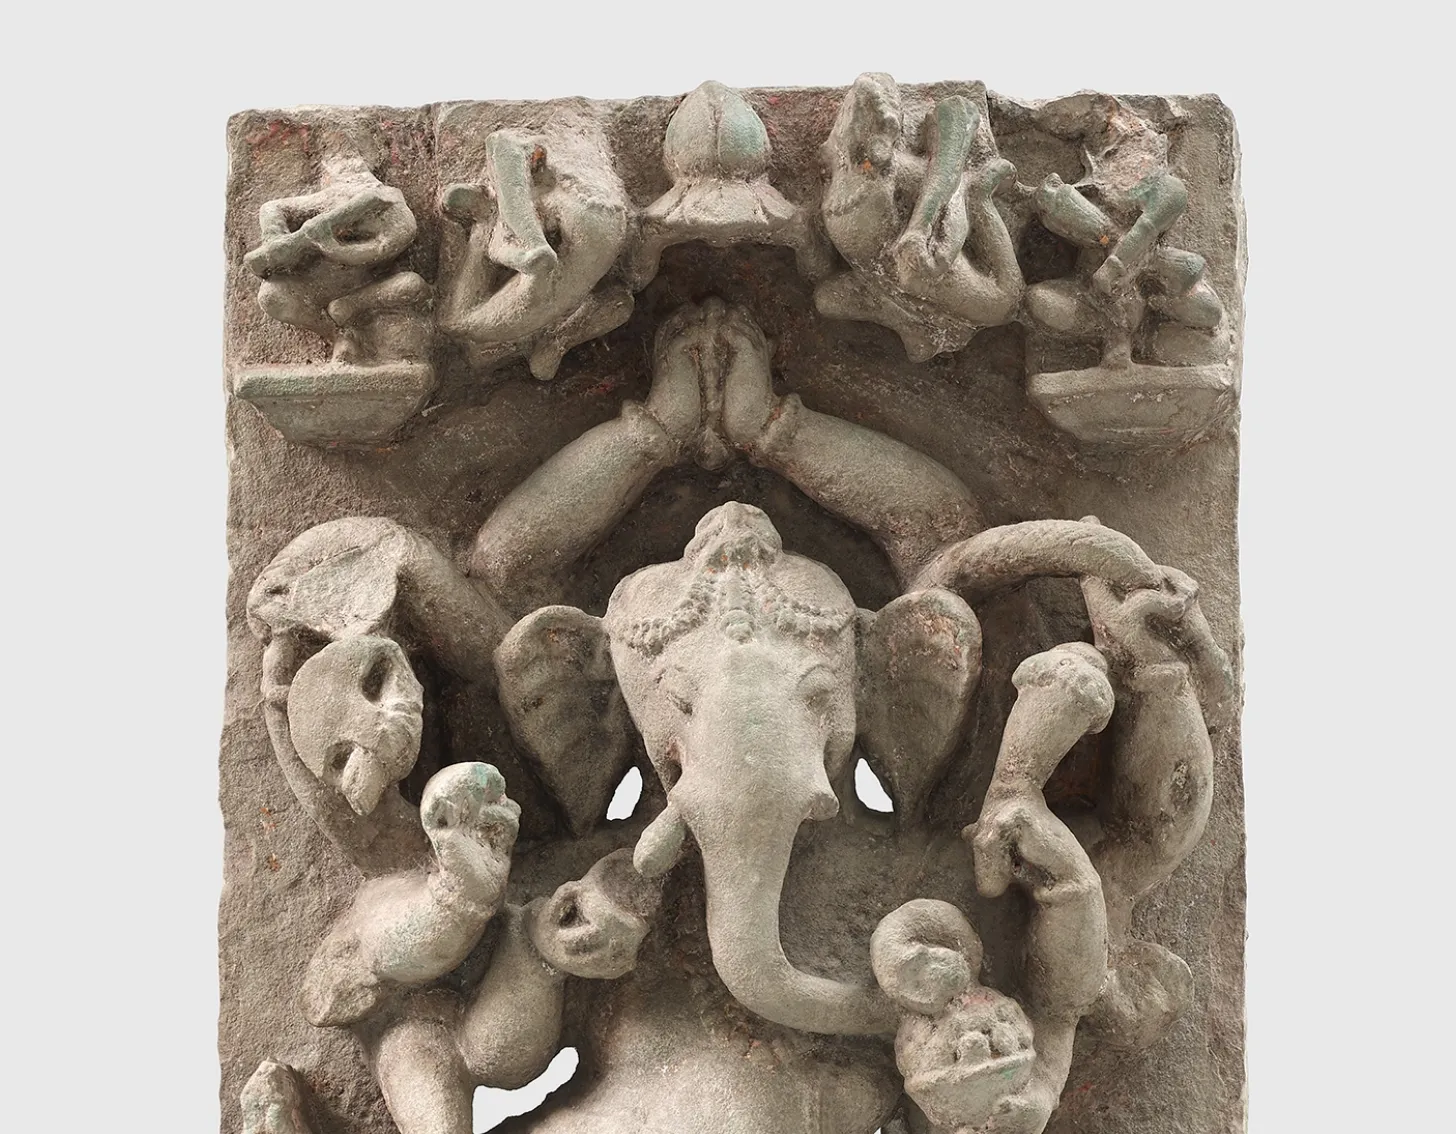 Close up look of : A sandstone stele of Ganesha